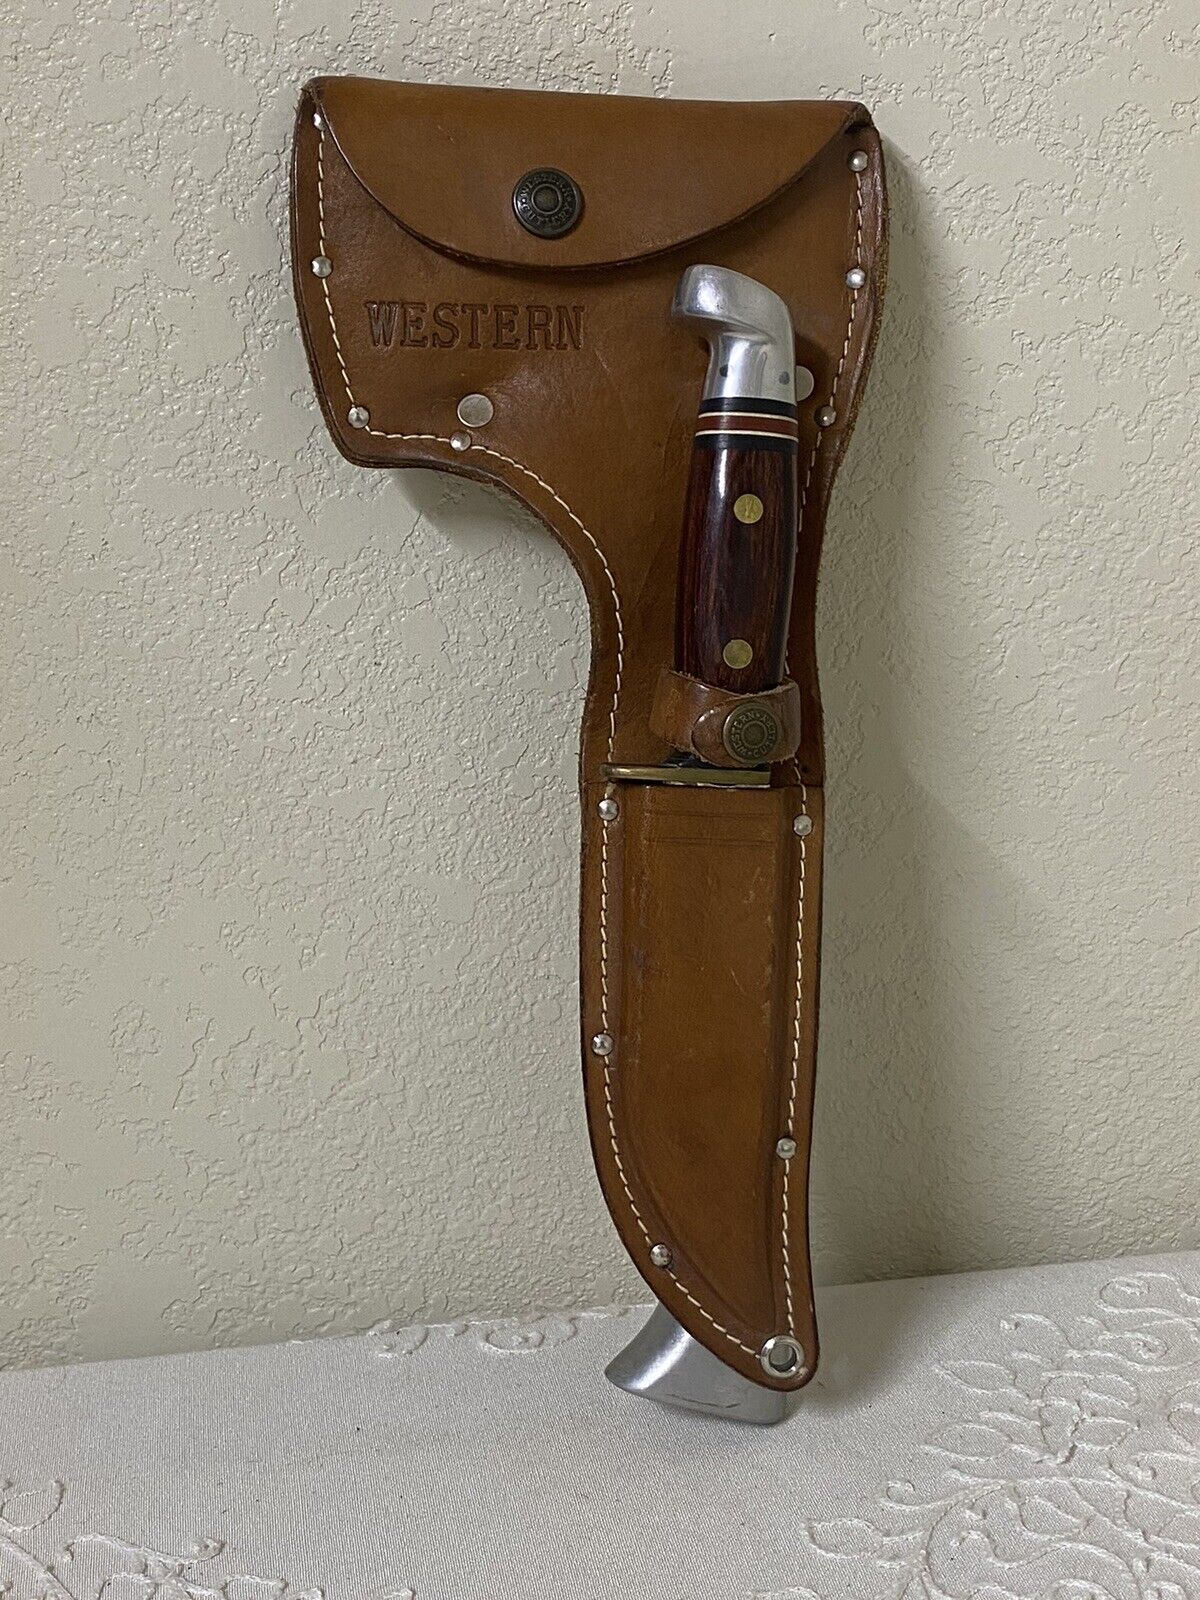 Vintage Western Knife and Hatchet Boulder Colorado U.S.A W10 W66 Leather Handle